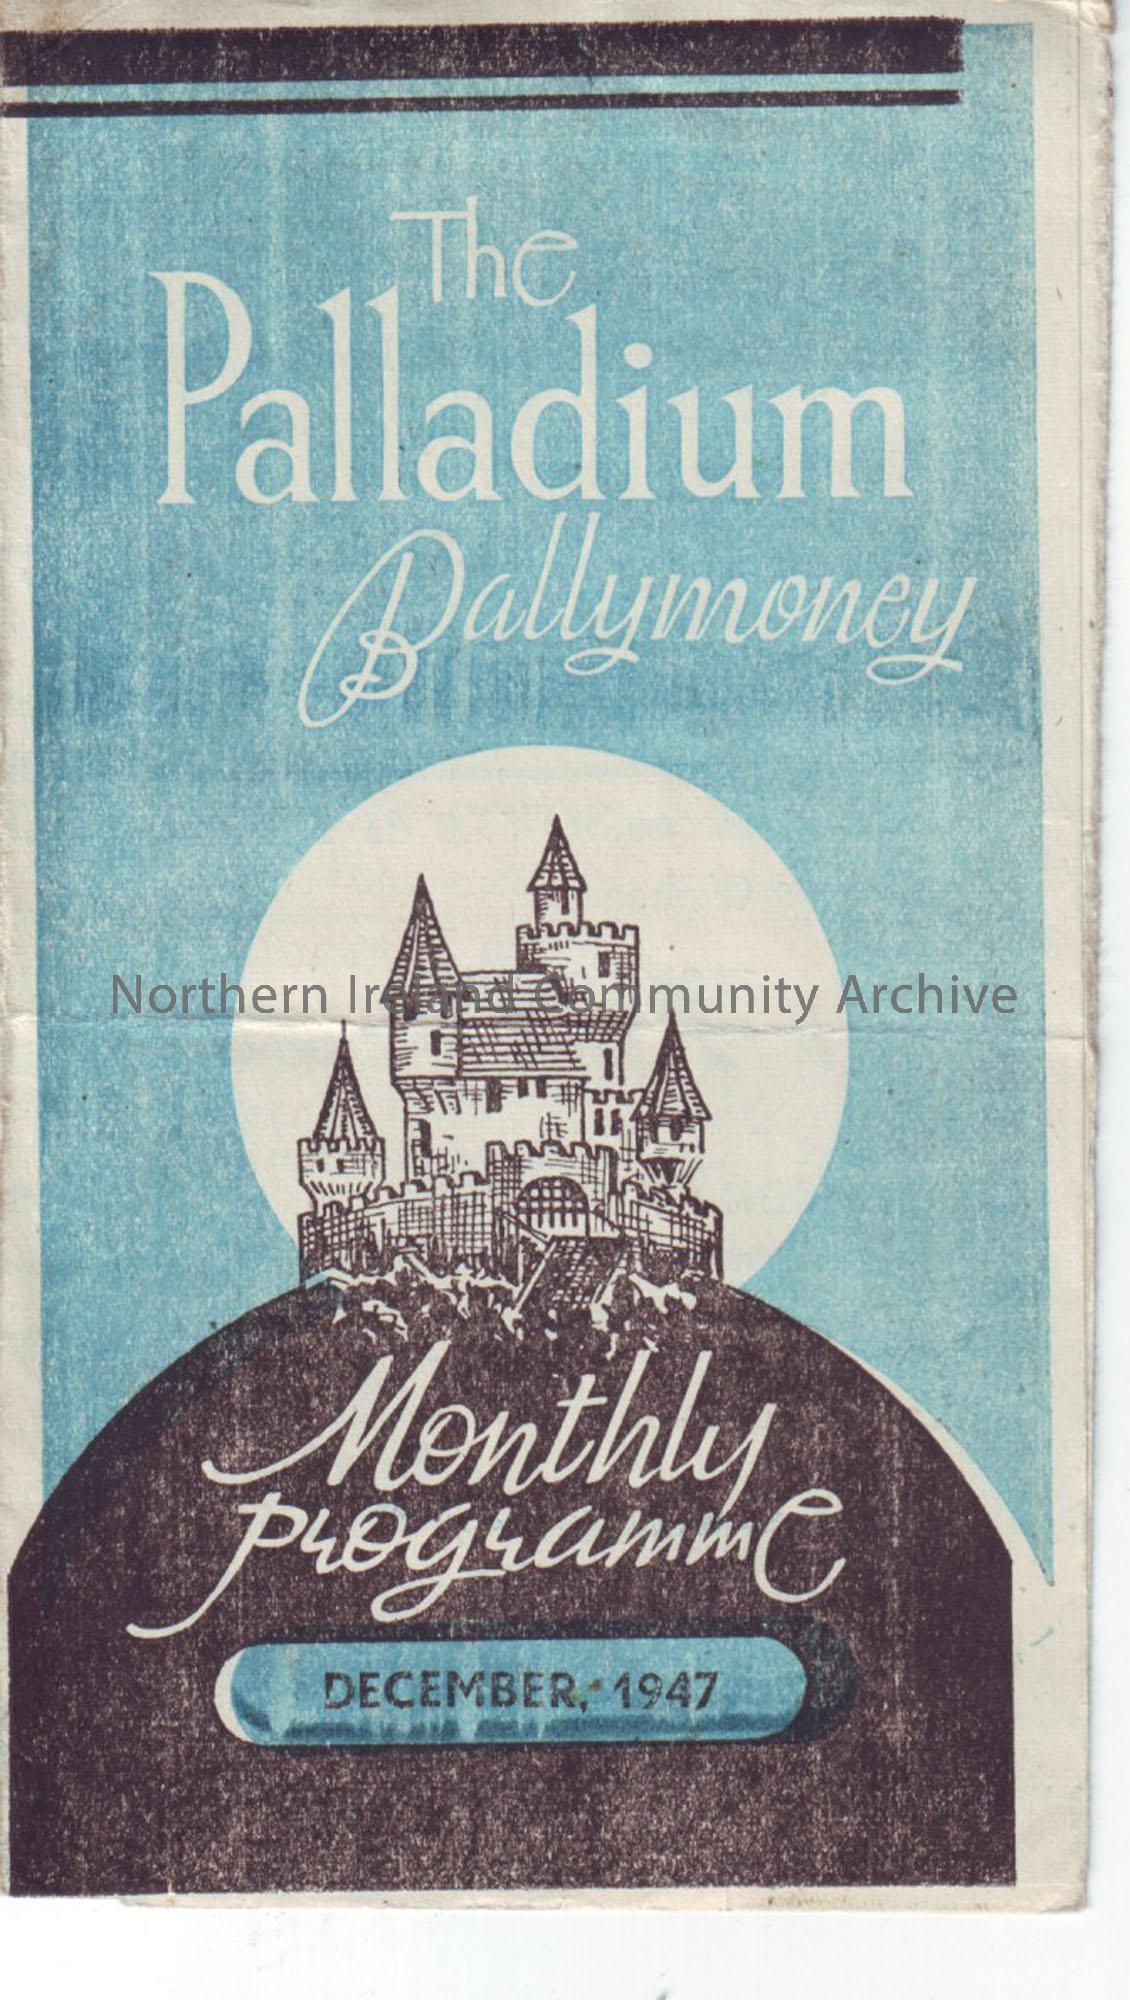 blue monthly programme for Ballymoney Palladium cinema- December 1947